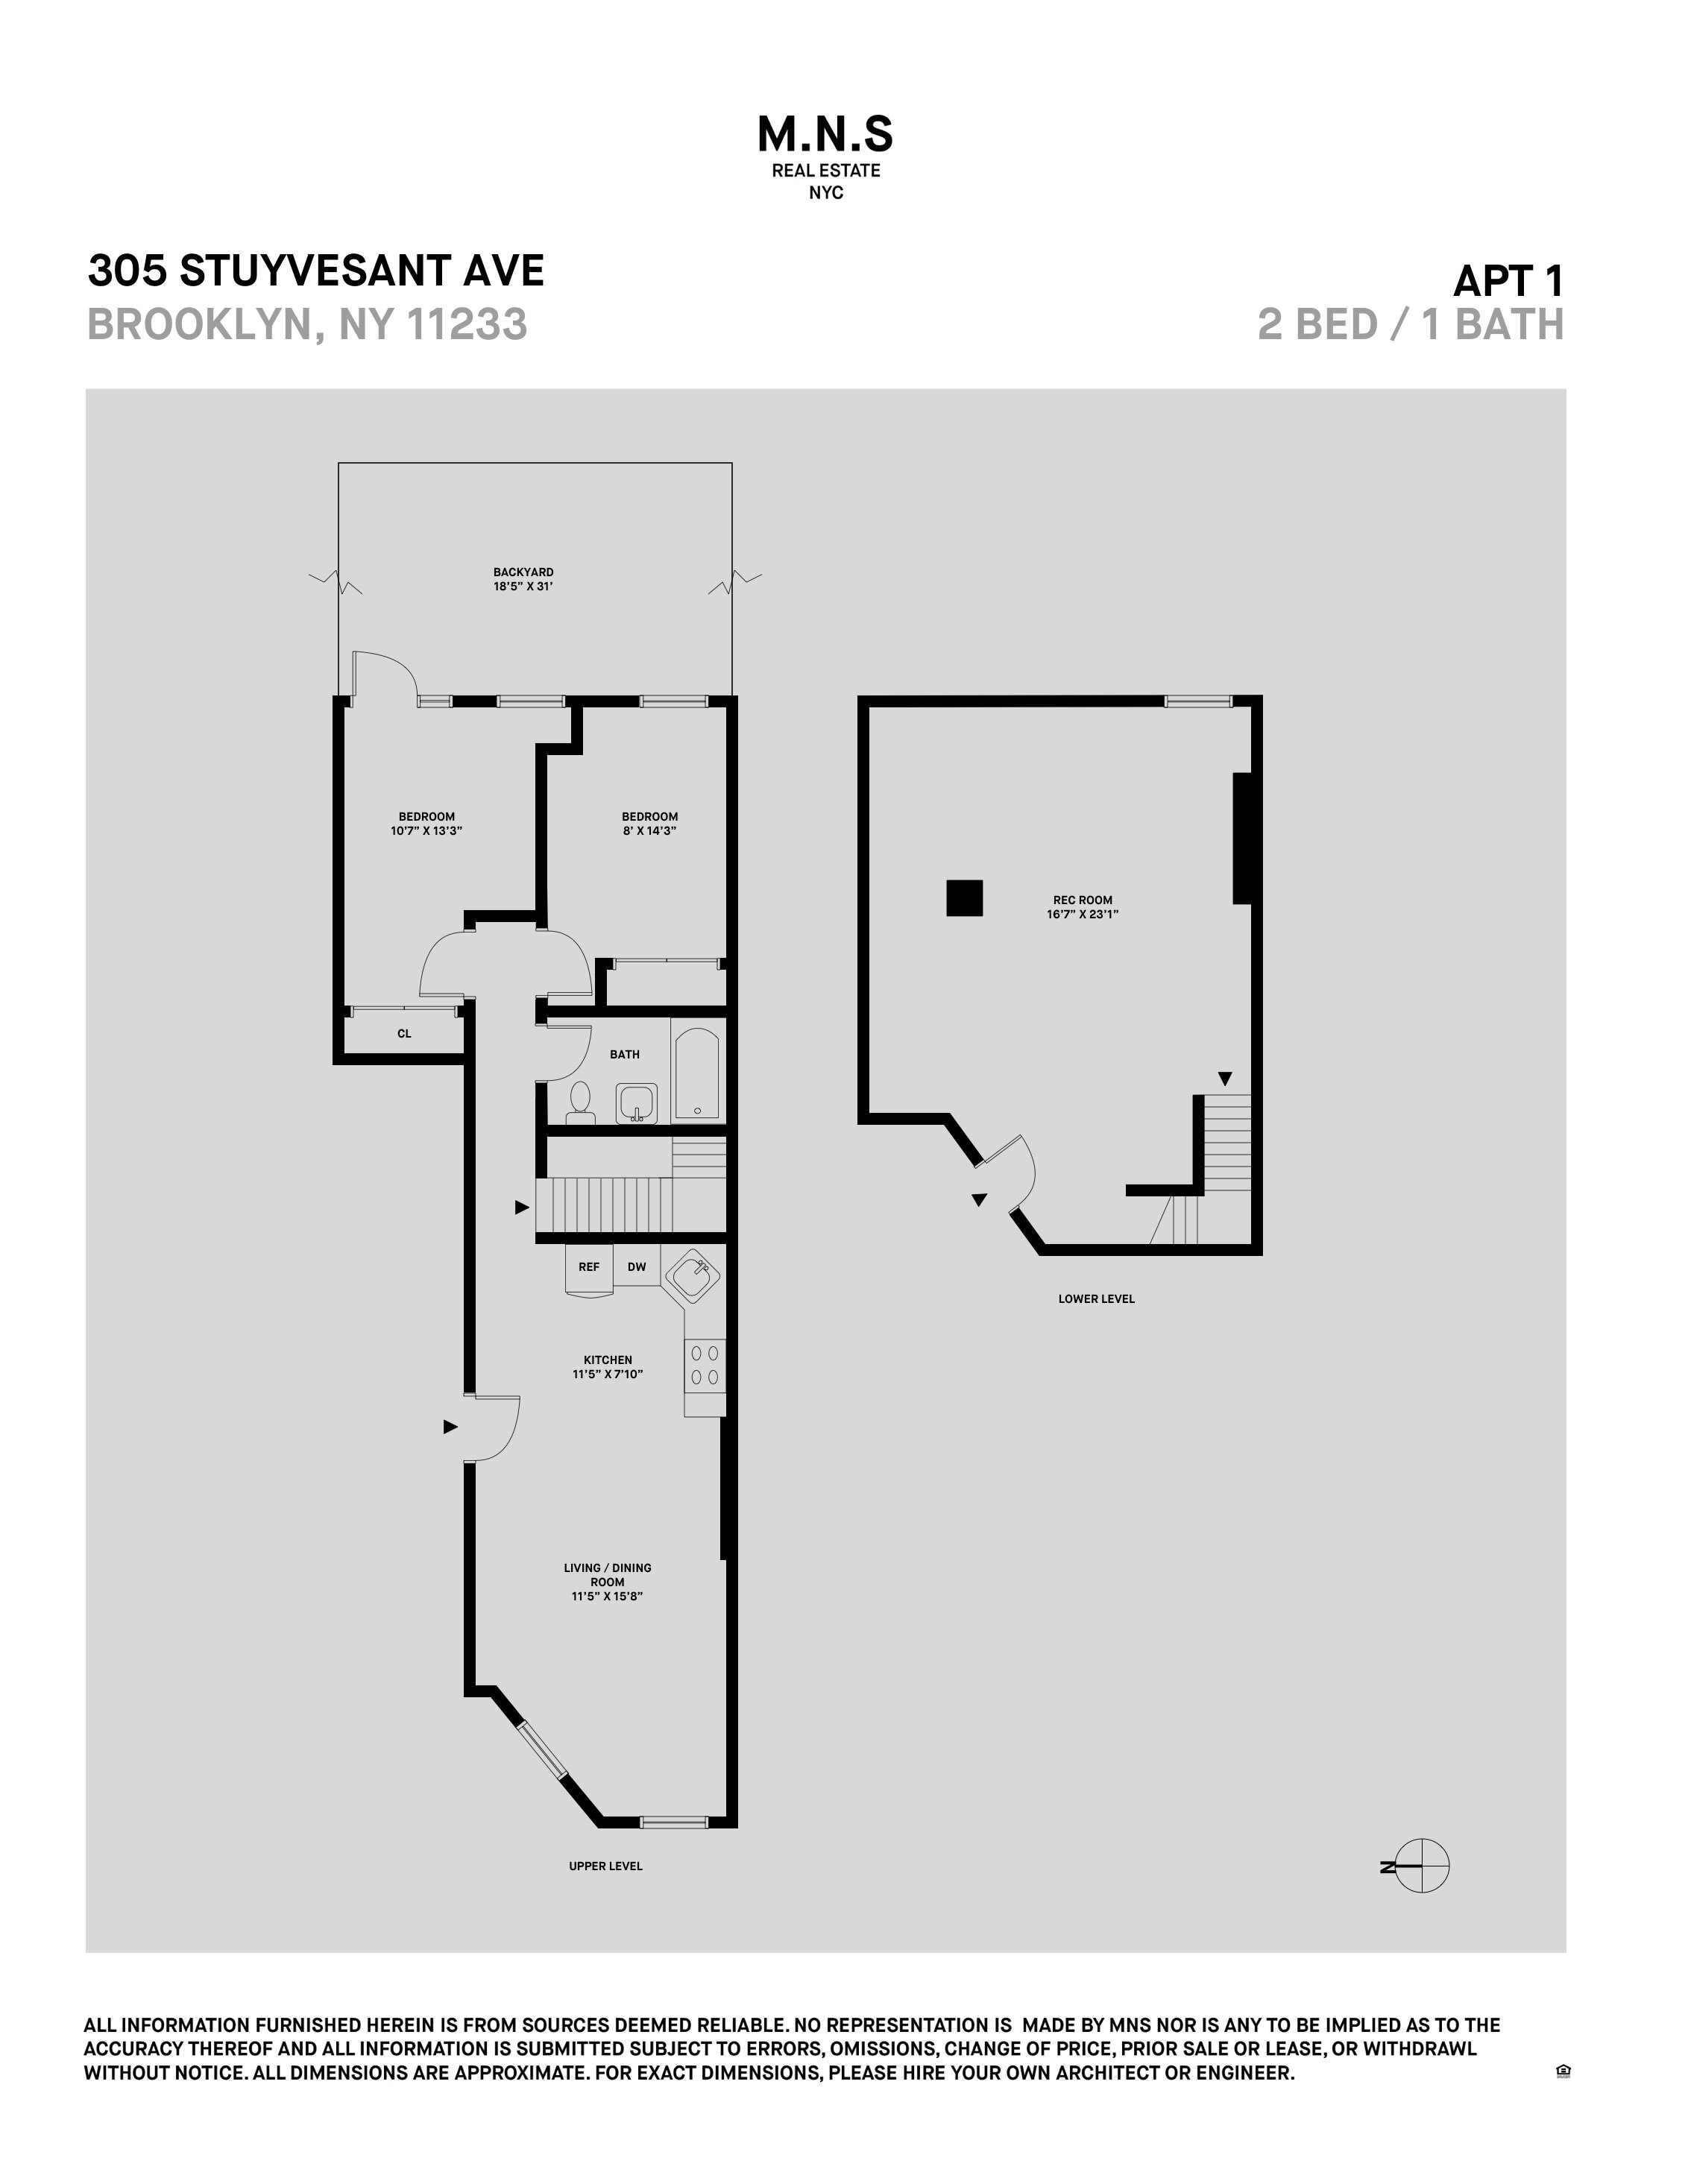 305 Stuyvesant Ave #1 Floorplan.jpg